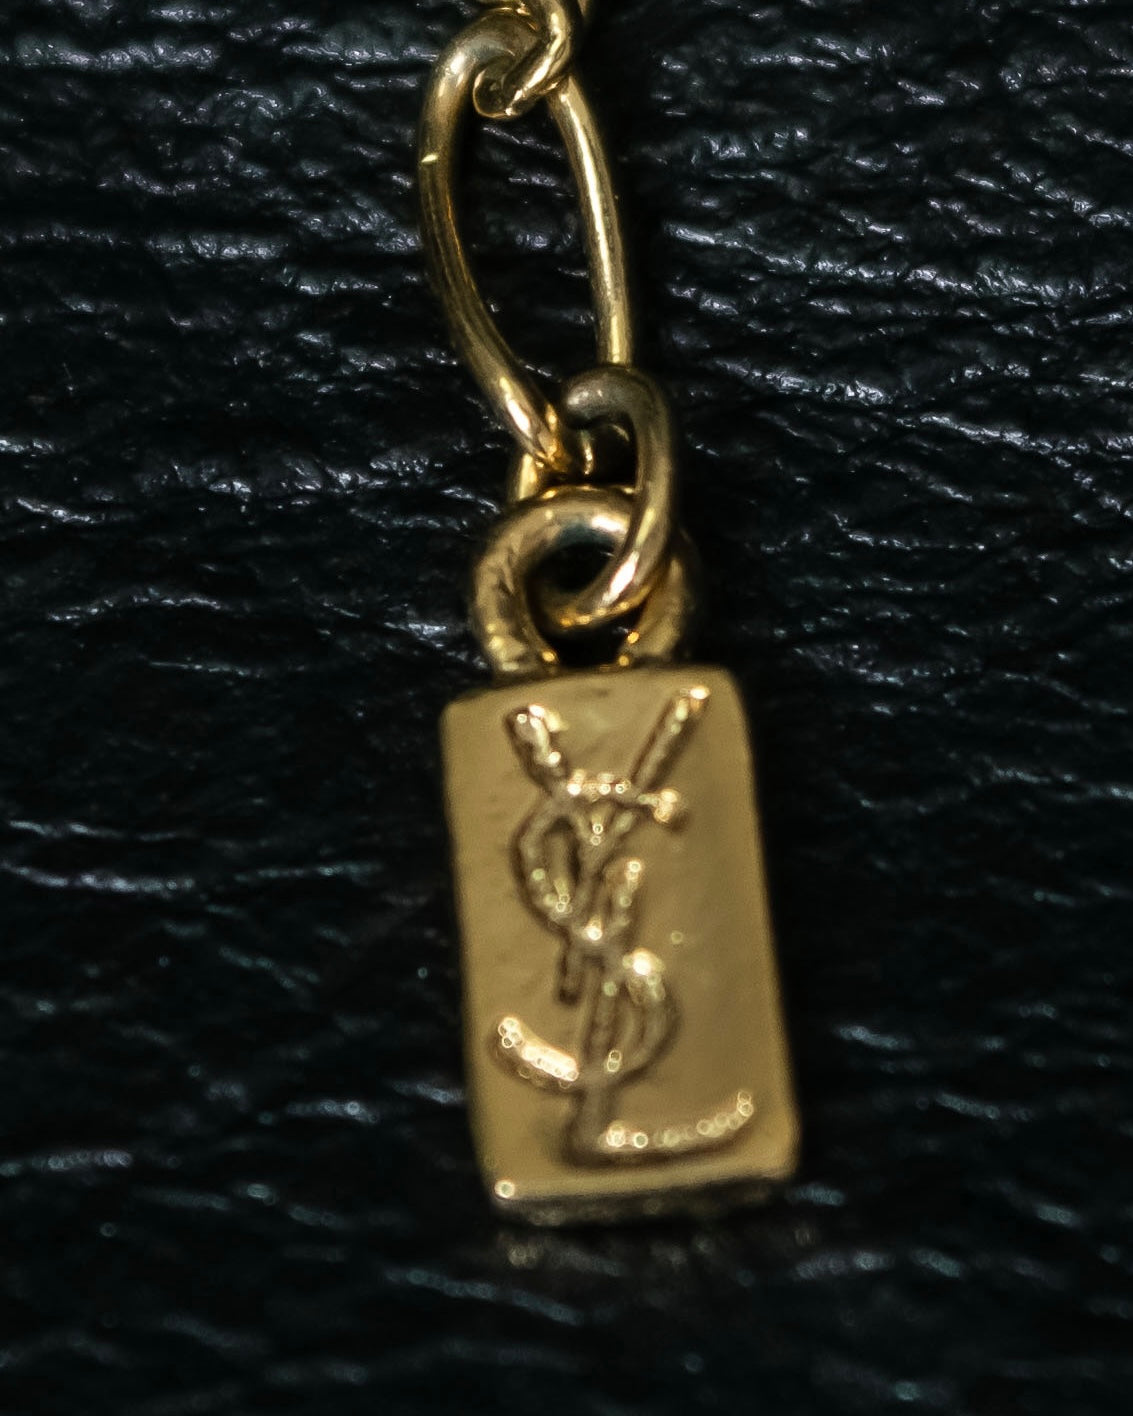 “Yves Saint Laurent” Antique processed gold chain necklace